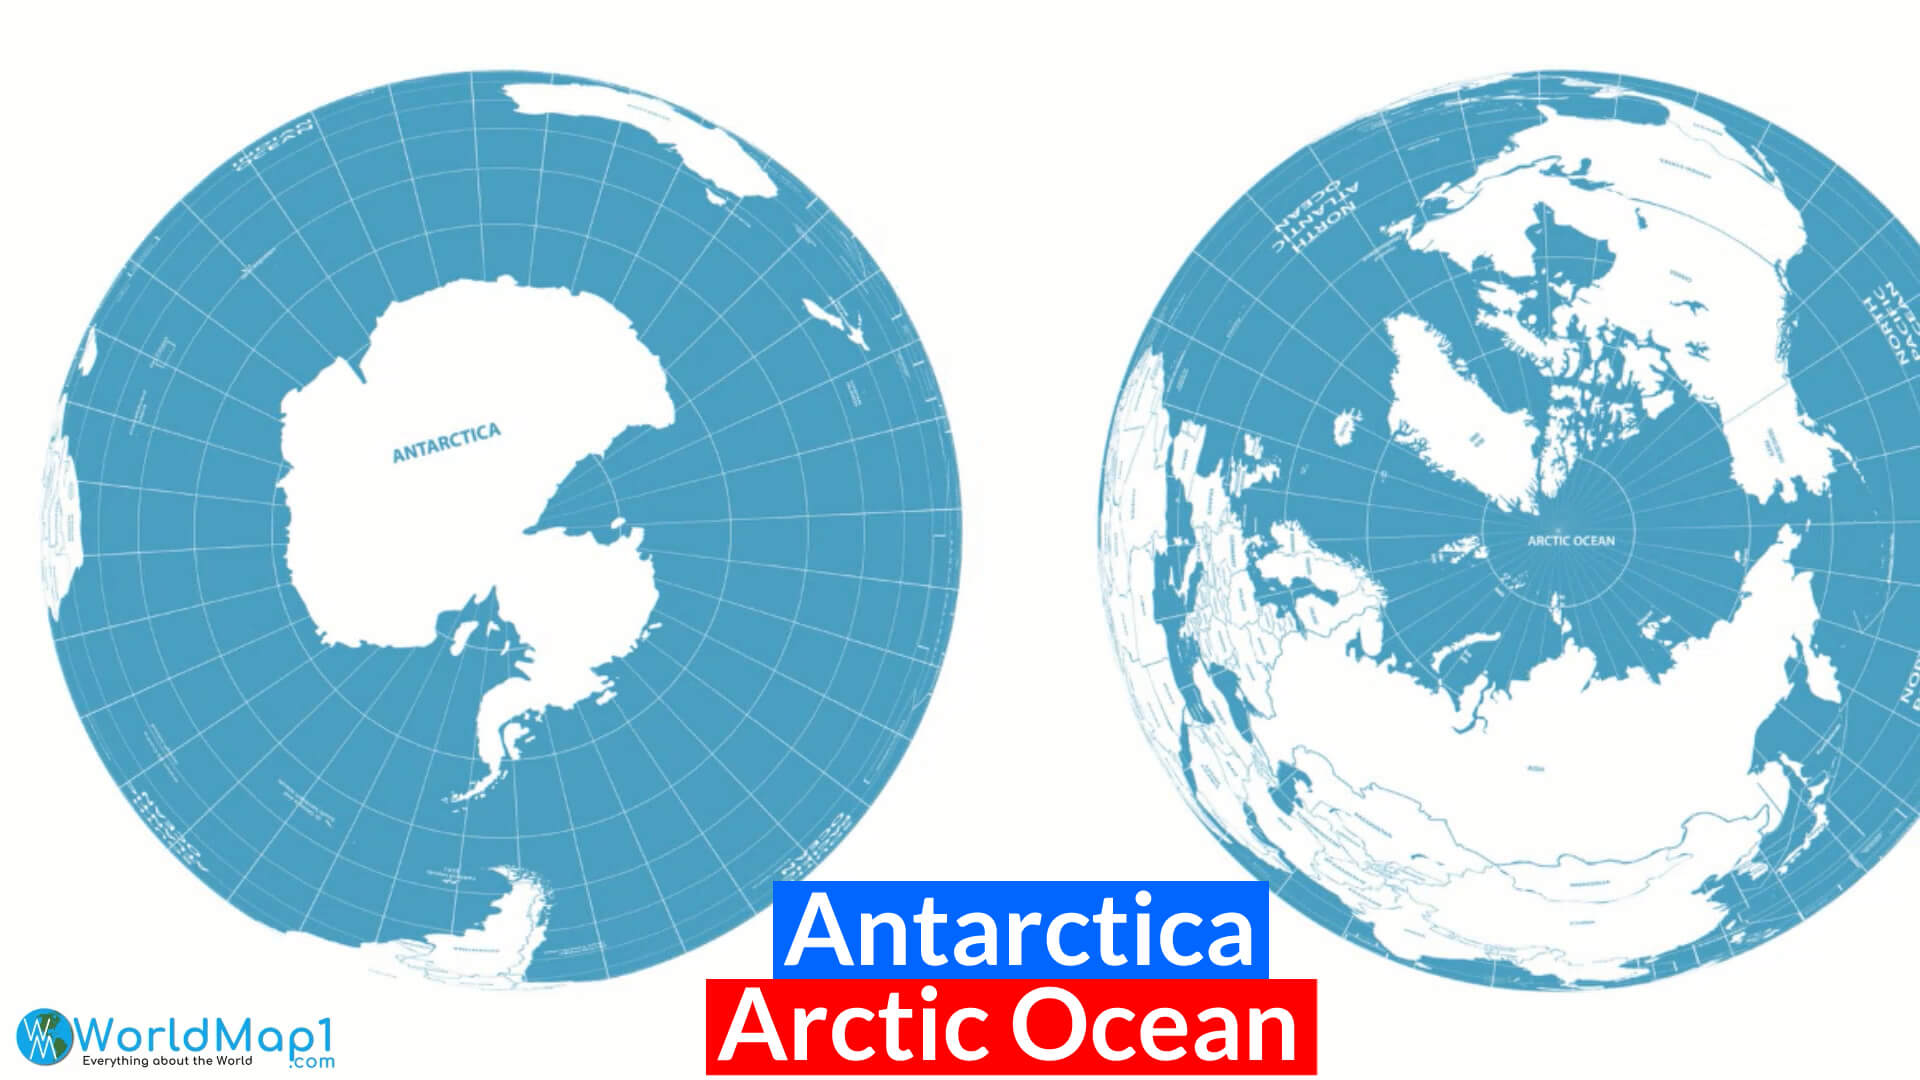 Antarctica and Arctic Ocean